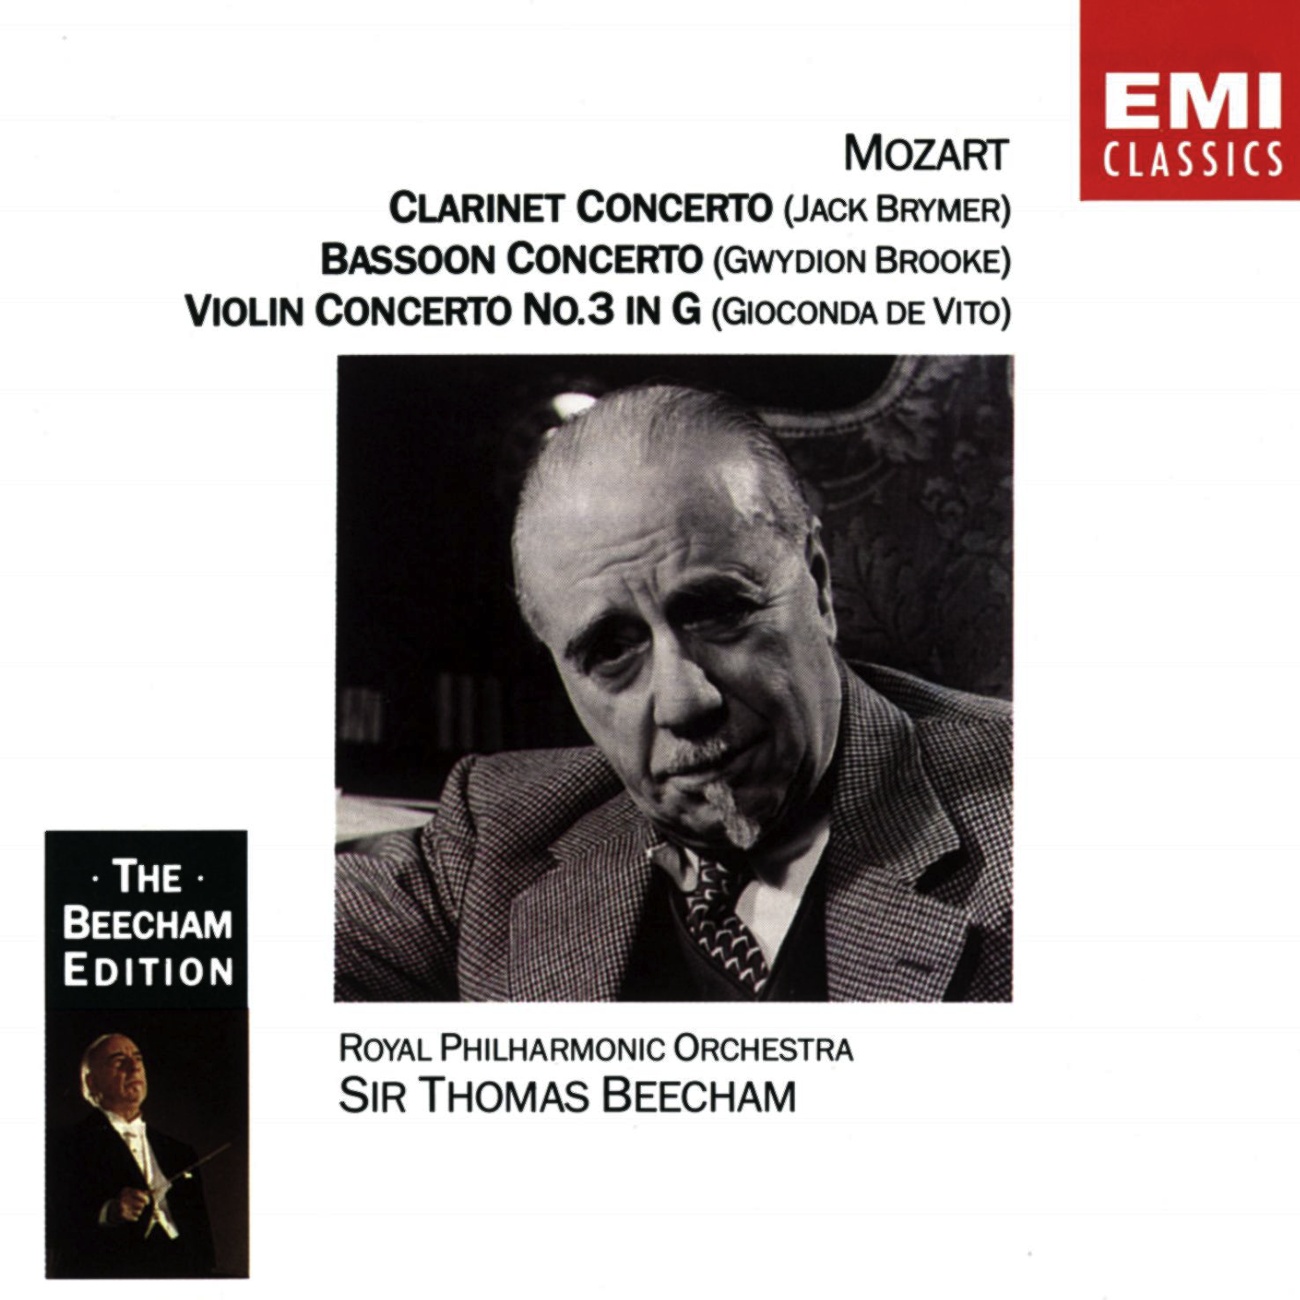 Clarinet Concerto in A K.622 (1991 Digital Remaster): II.   Adagio